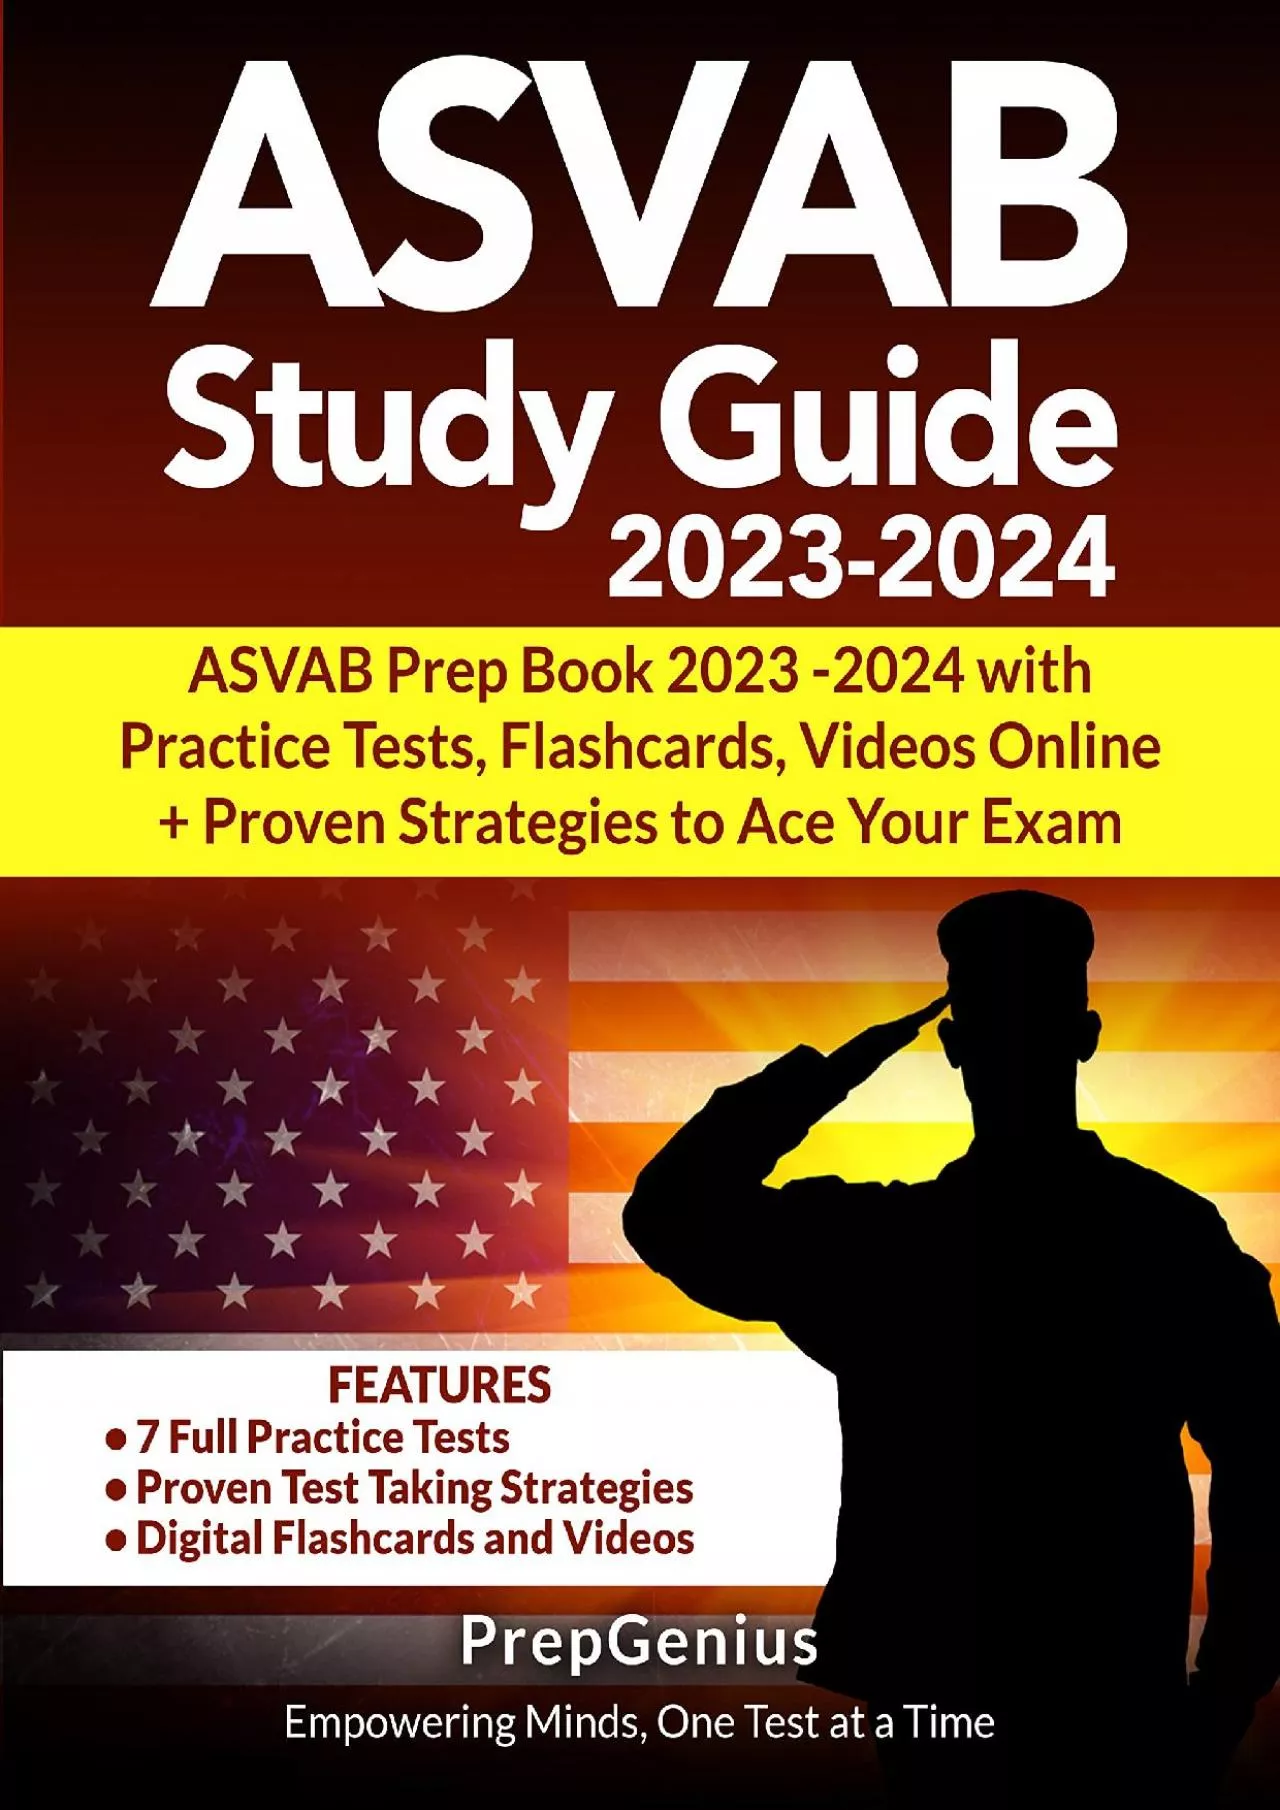 [EBOOK] ASVAB Study Guide 2023-2024: ASVAB Prep Book 2023 -2024 with Practice Tests, Videos